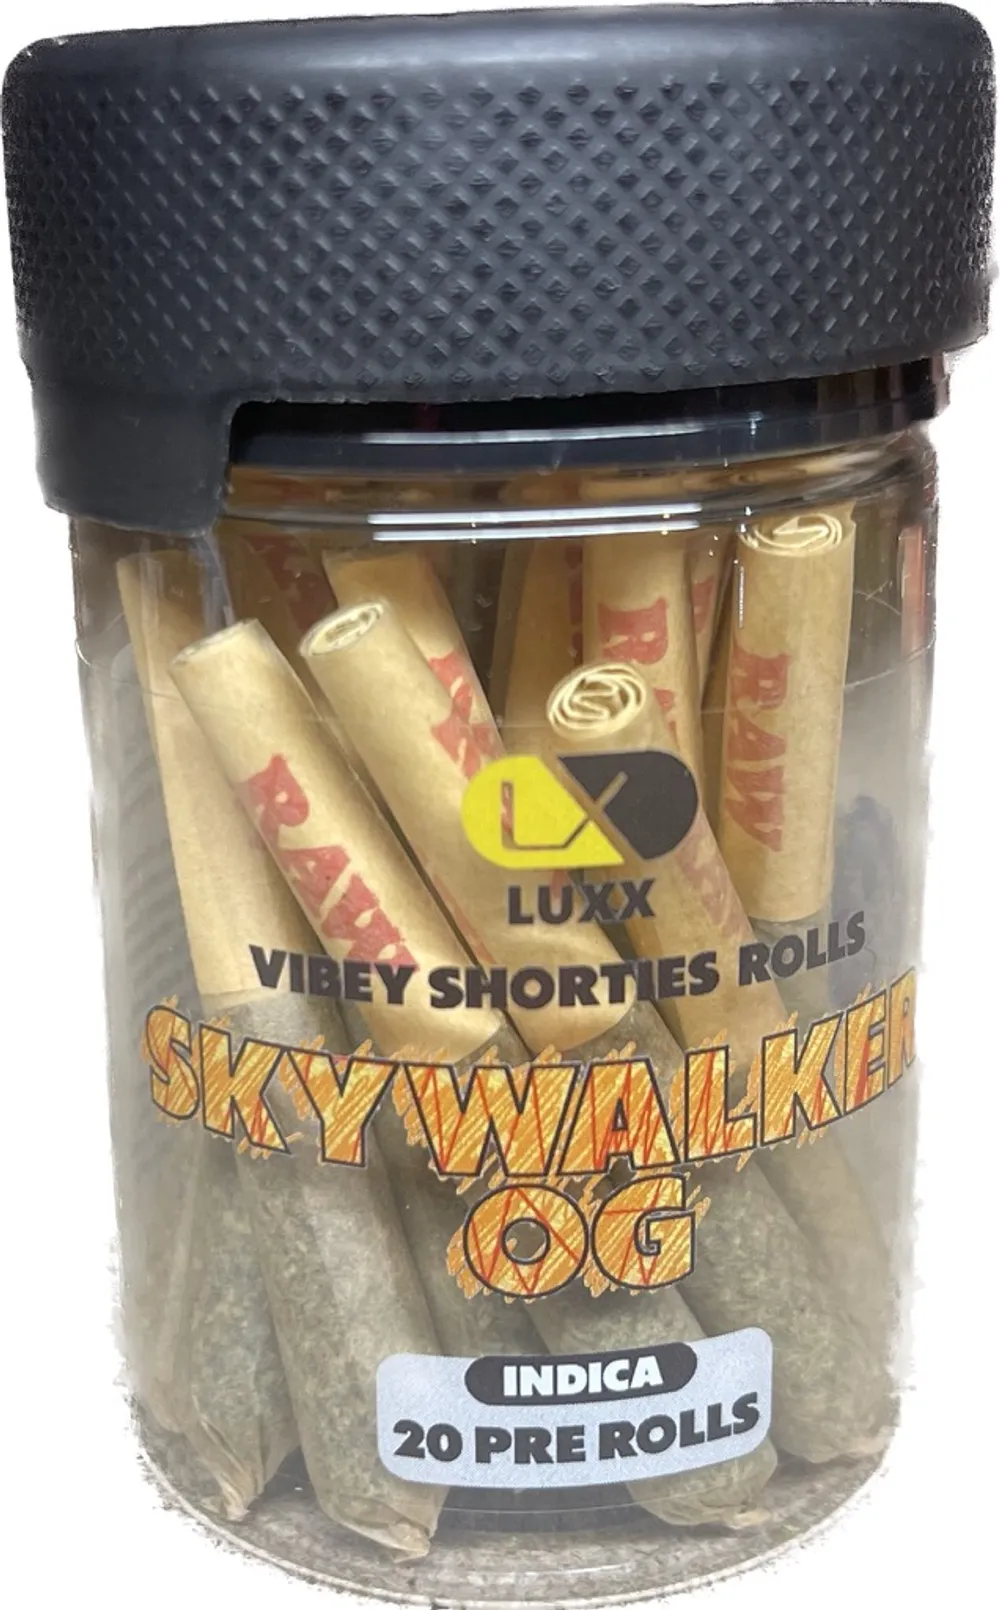 Luxx Vibey Shorties Rolls - Skywalker OG 20ct